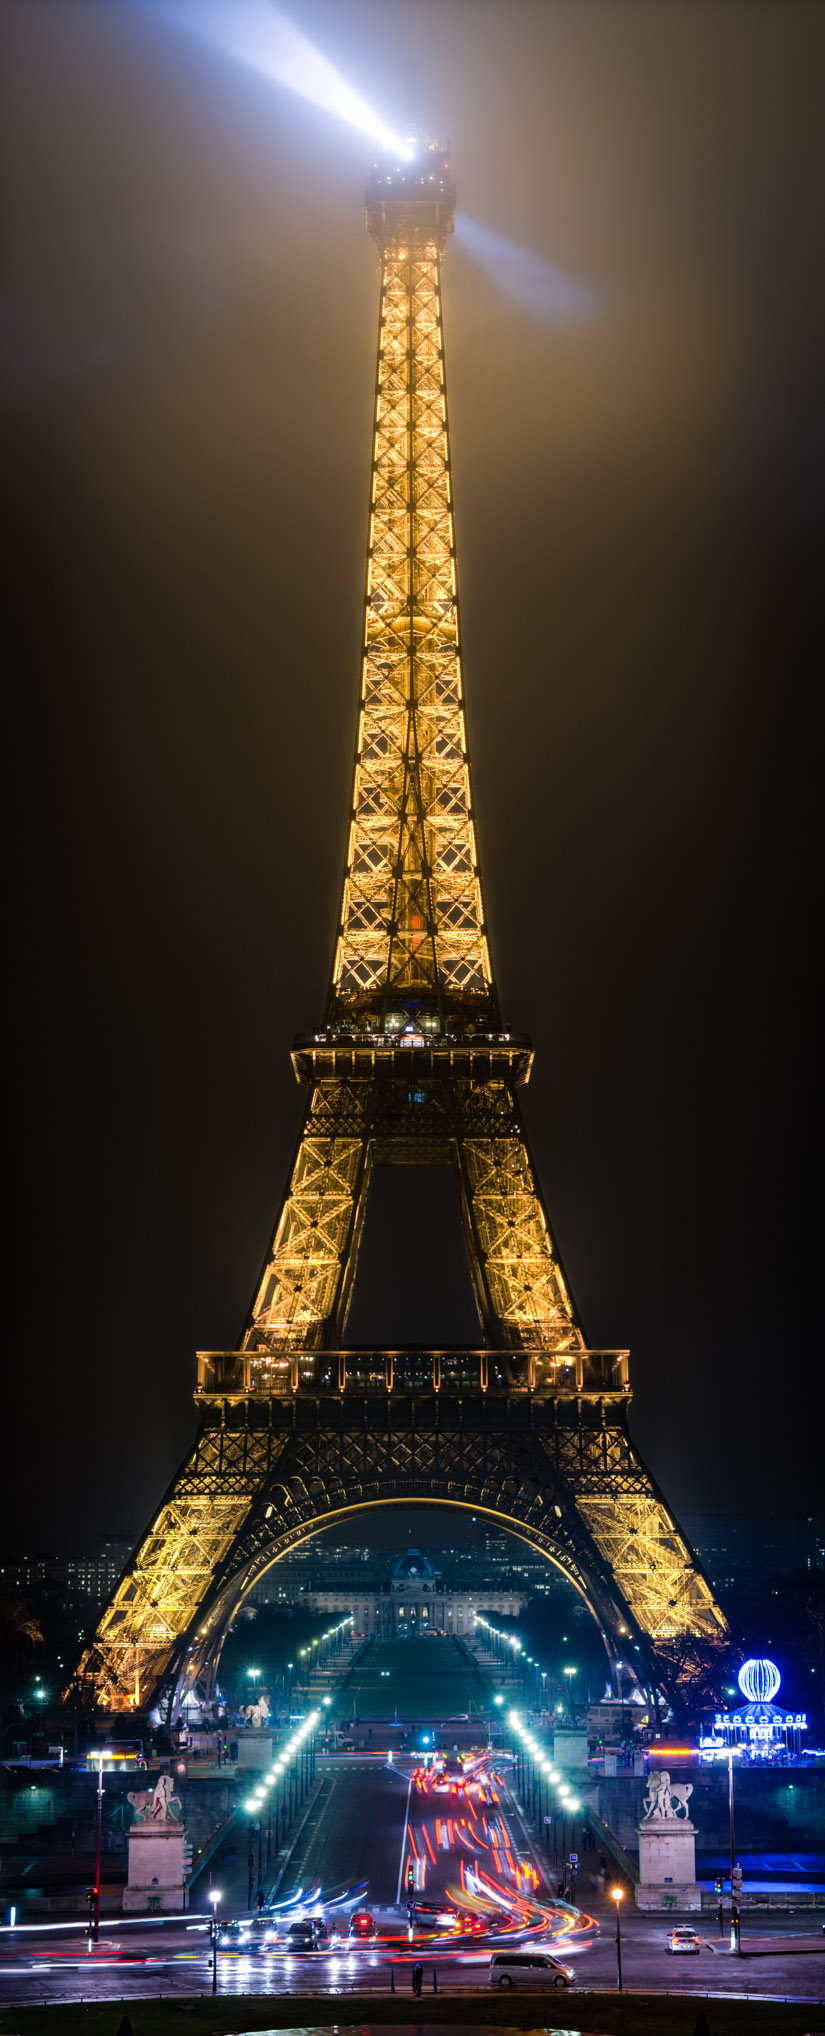 Tower and Traffic - Champ de Mars, Eiffel Tower, Europe, France, Paris, night, panorama, traffic, travel